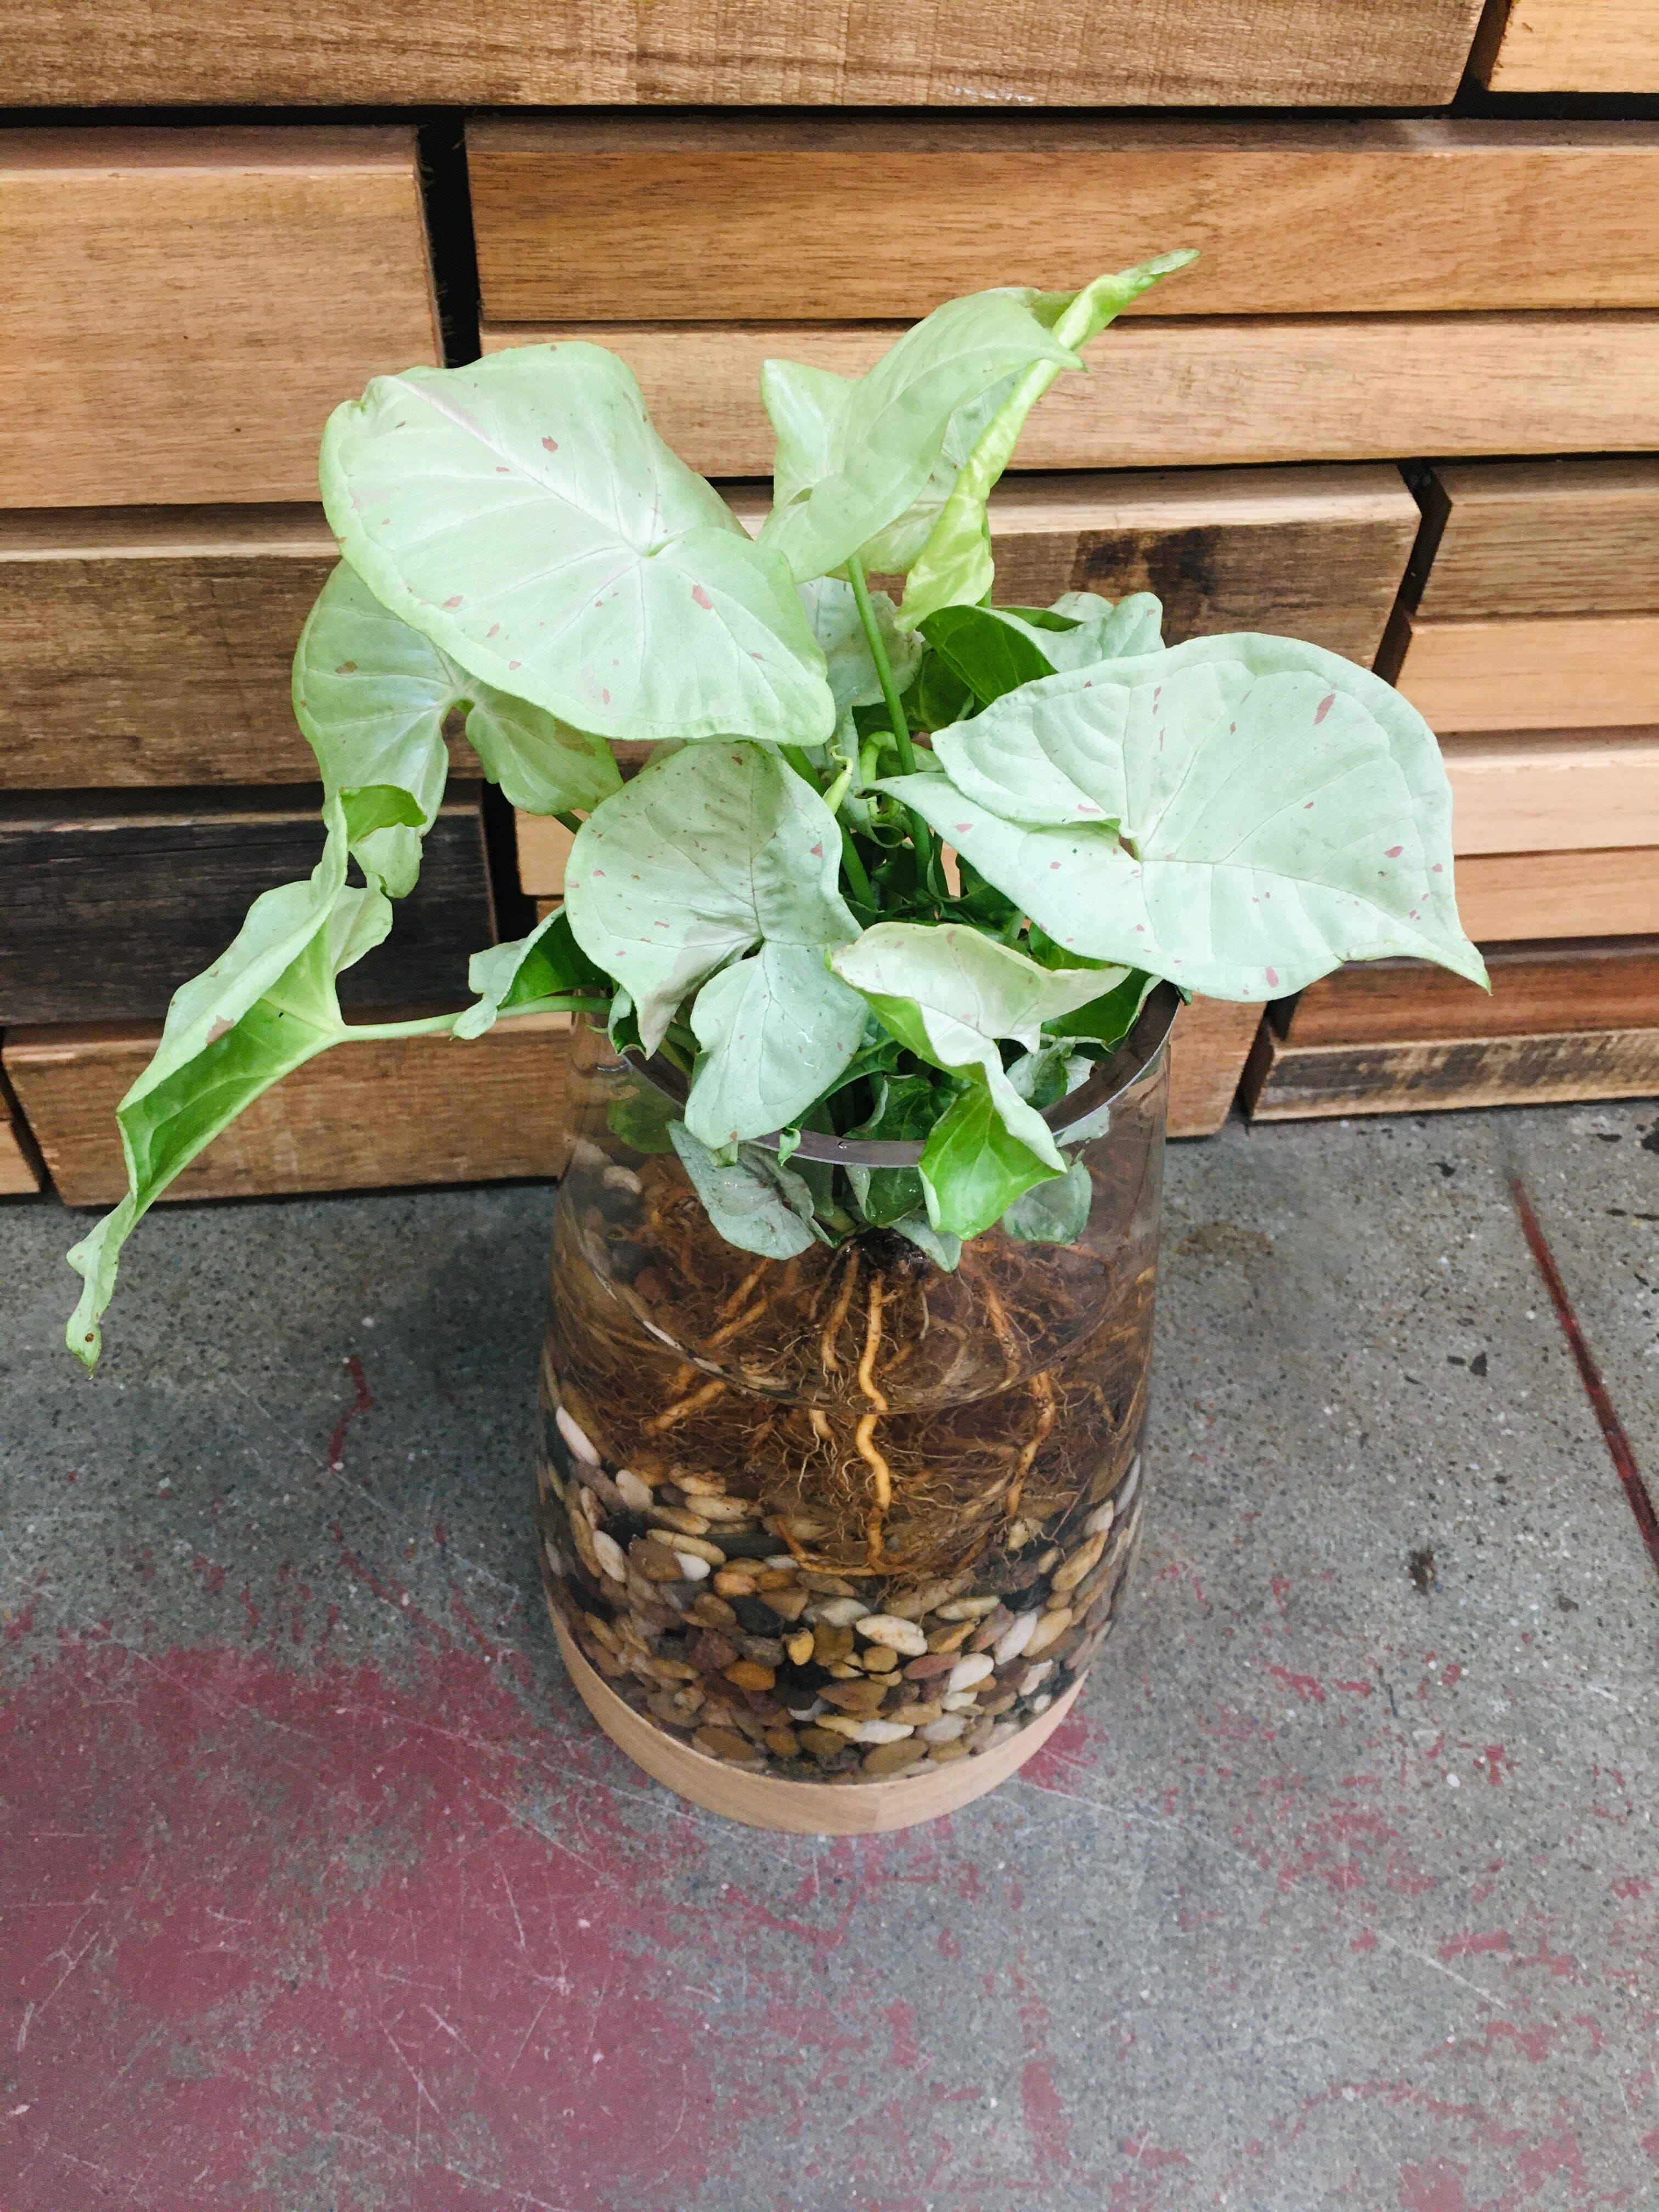 Water Plant Vase - DIY Home & Garden Waratah Complete Syngonium “Confetti” 